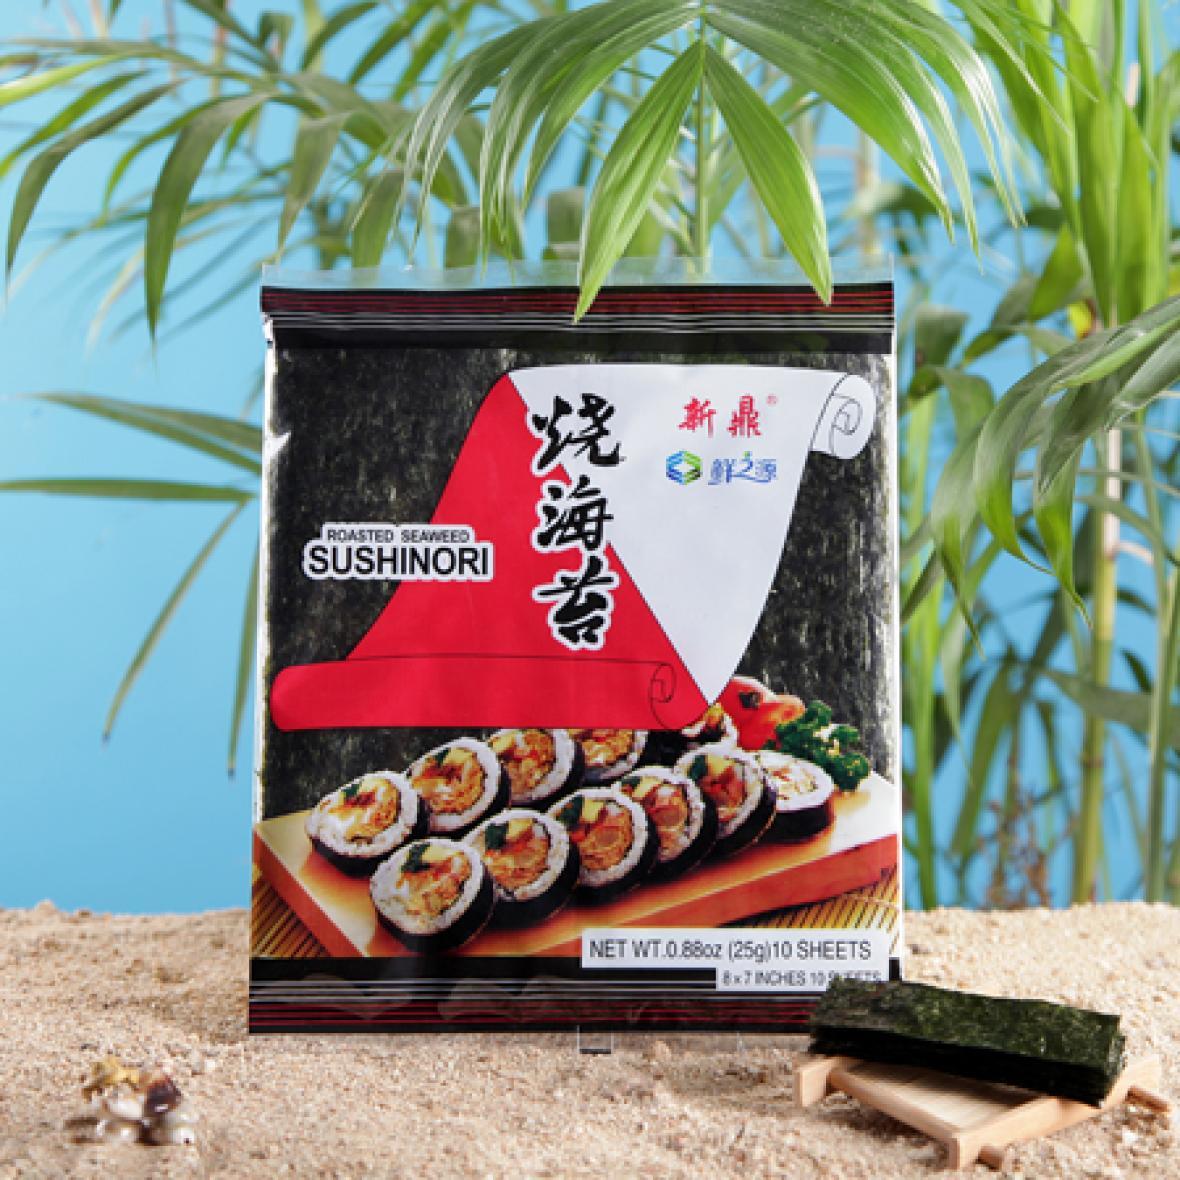 XZY Roasted Seaweed Sushi Nori, Red, 10 Sheets